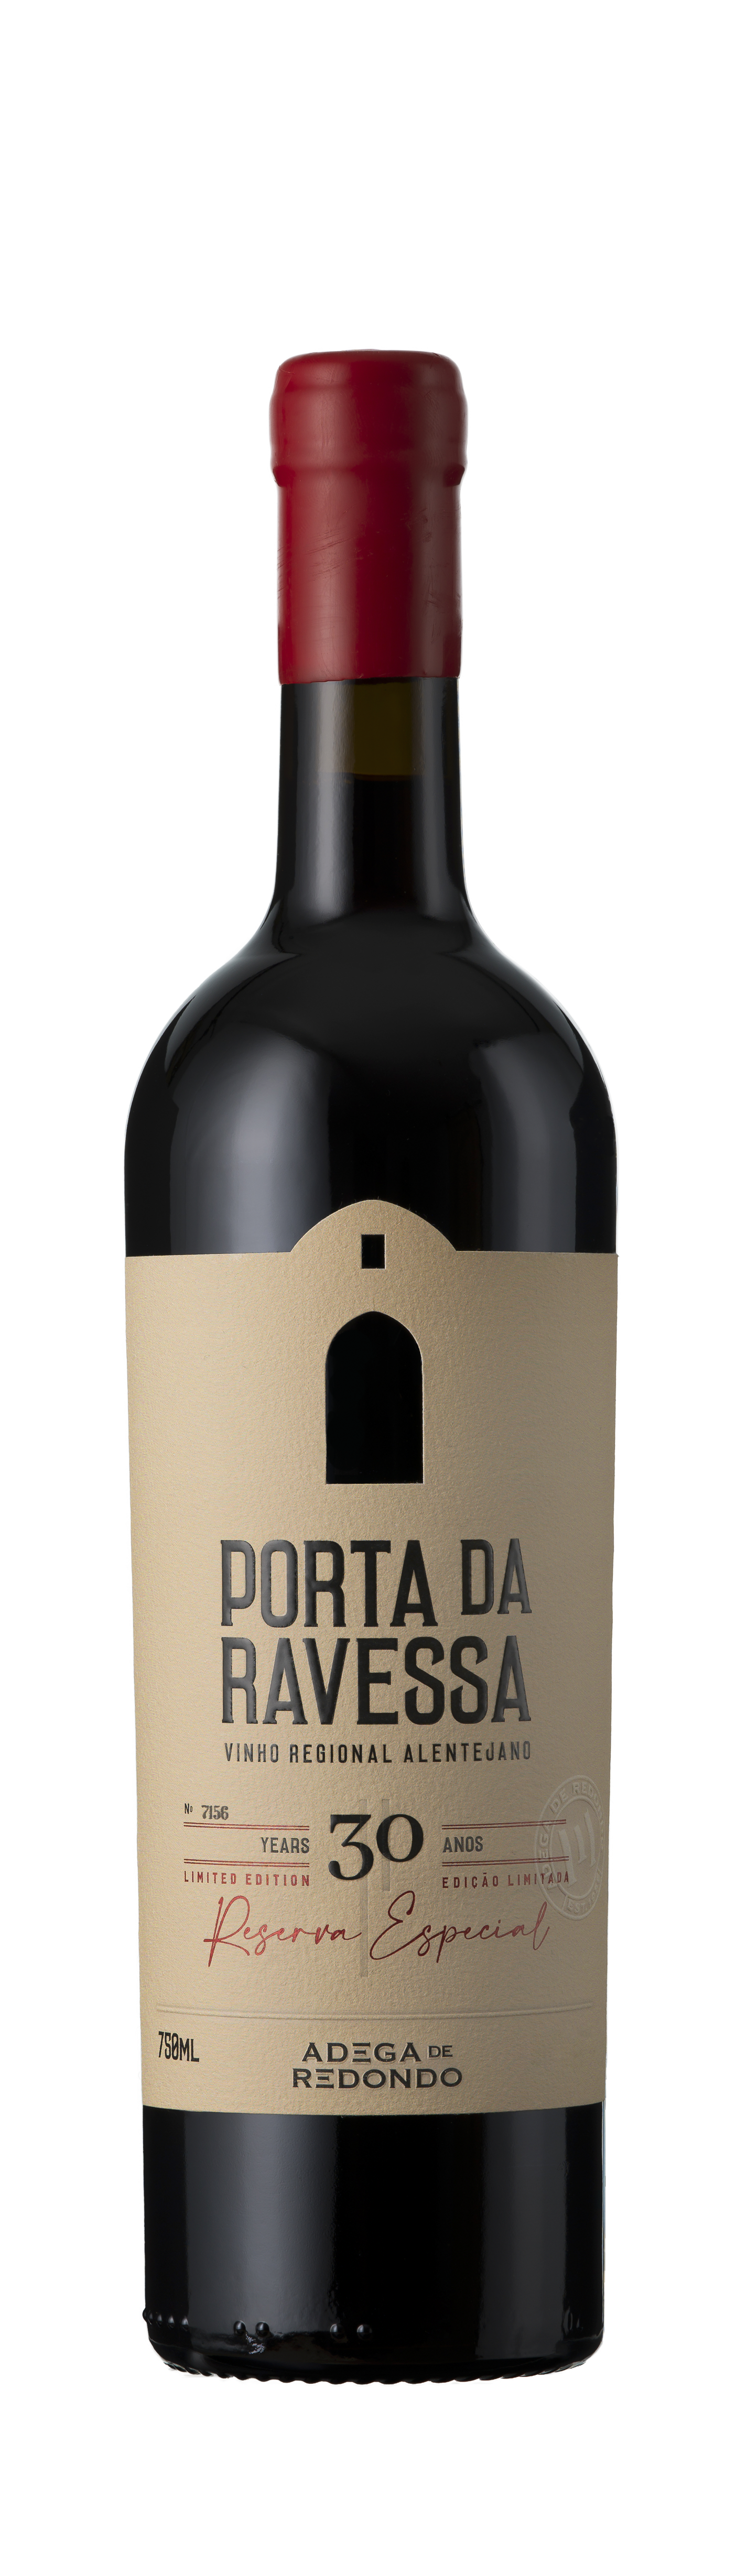 Adega de Alentejo, Tinto Reserva - Ravessa especial (30yr), Redondo, Porta 2017 Wine Portugal, IGP da Alliance